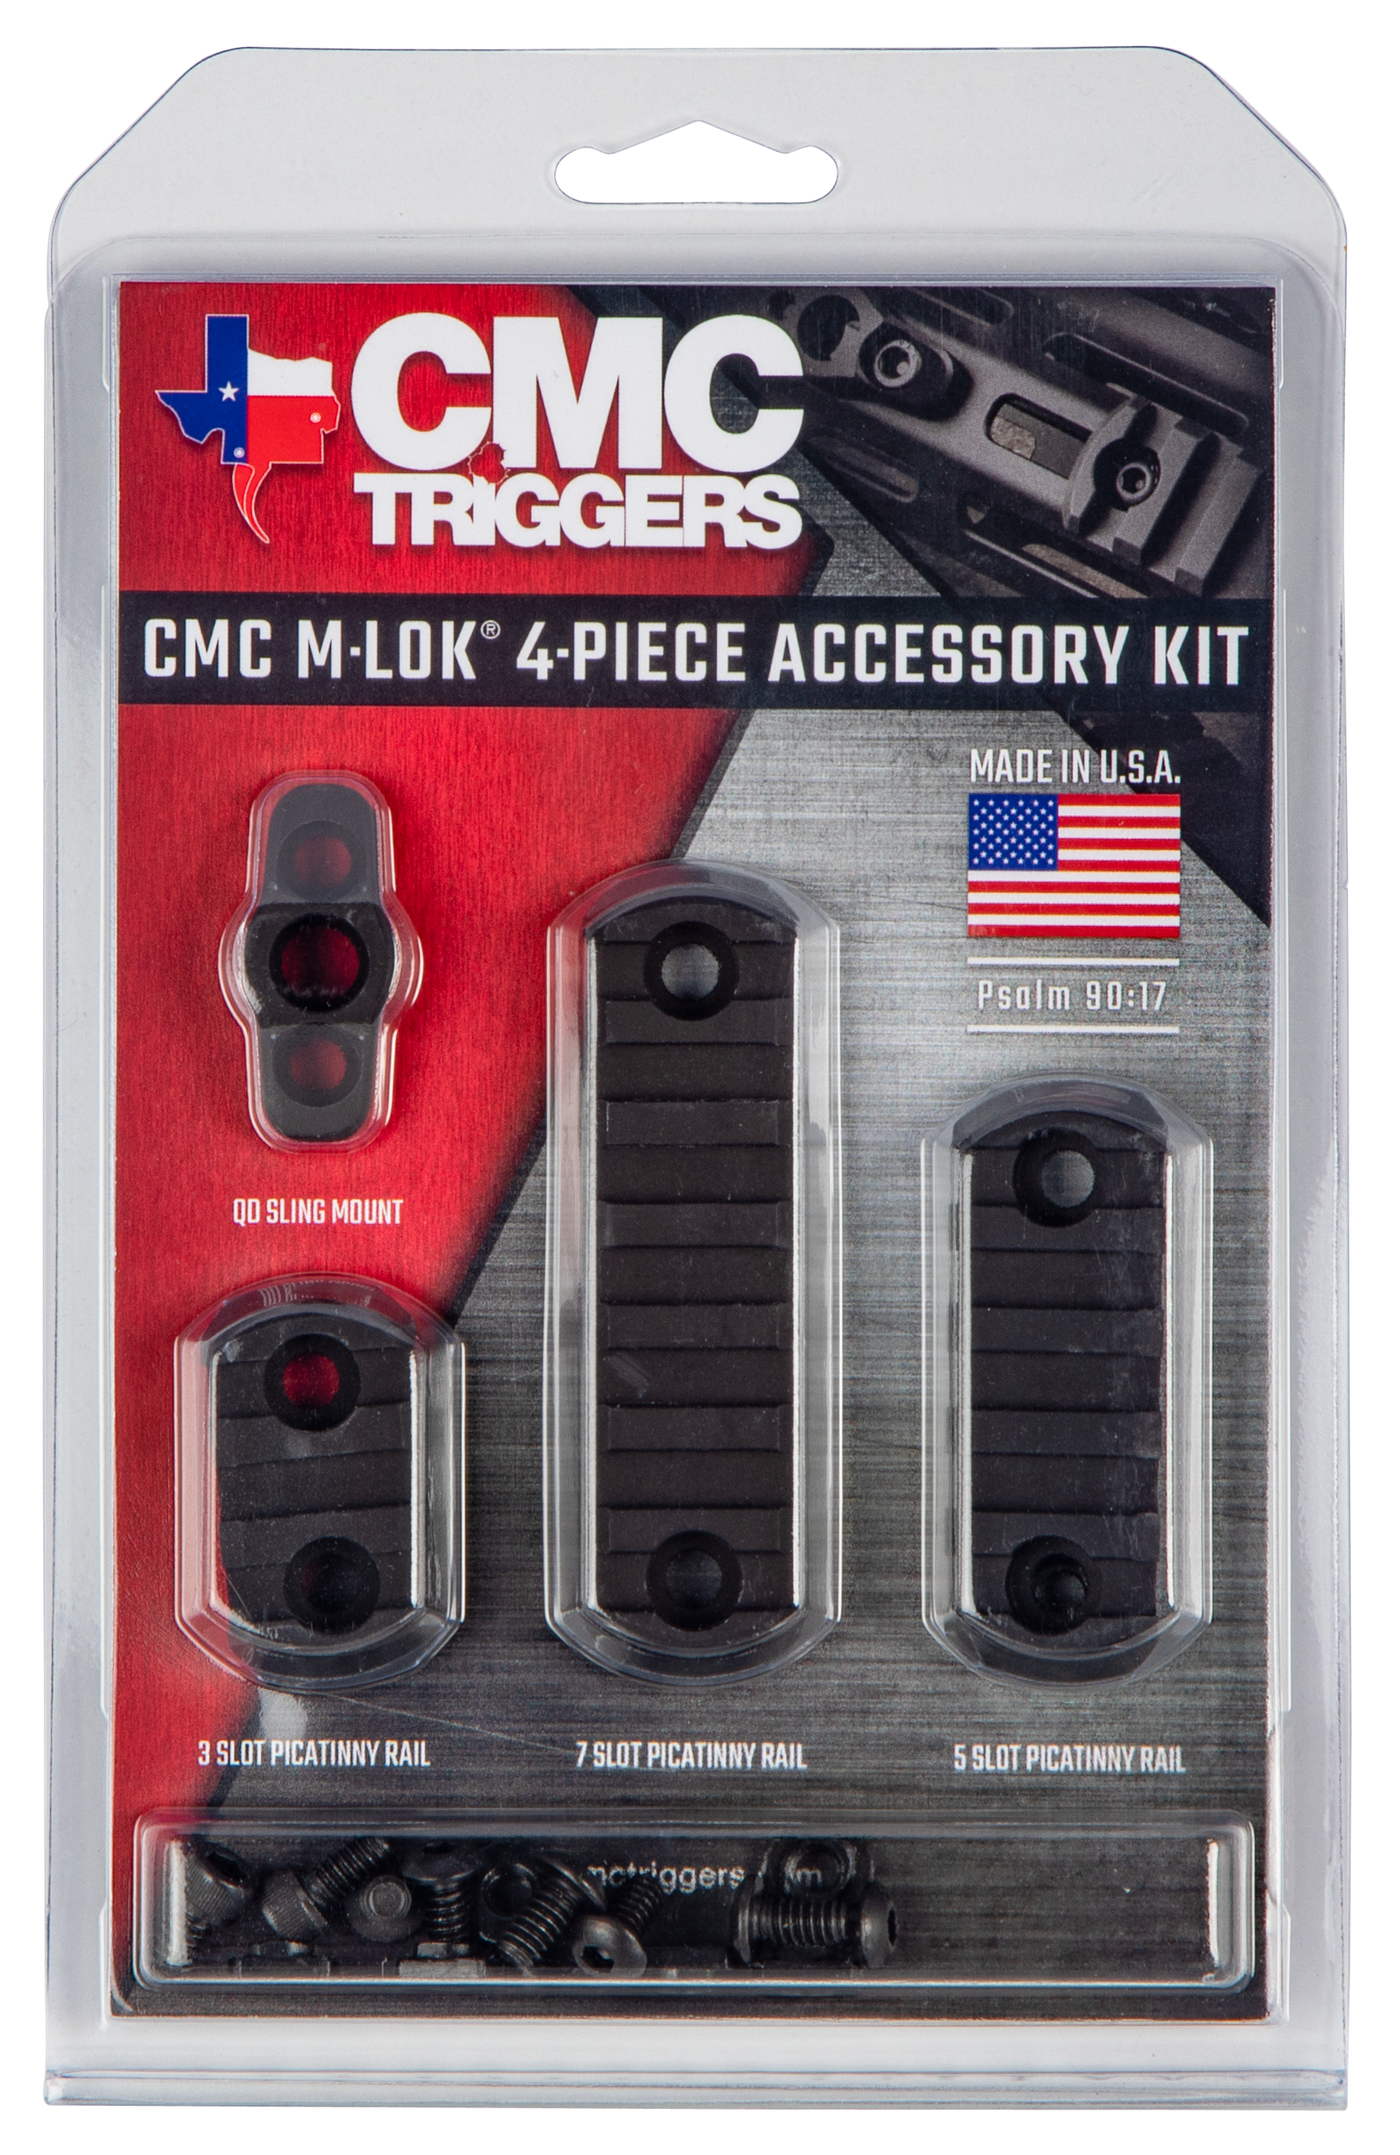 Cmc M-lok 4 Piece Accessory Kit